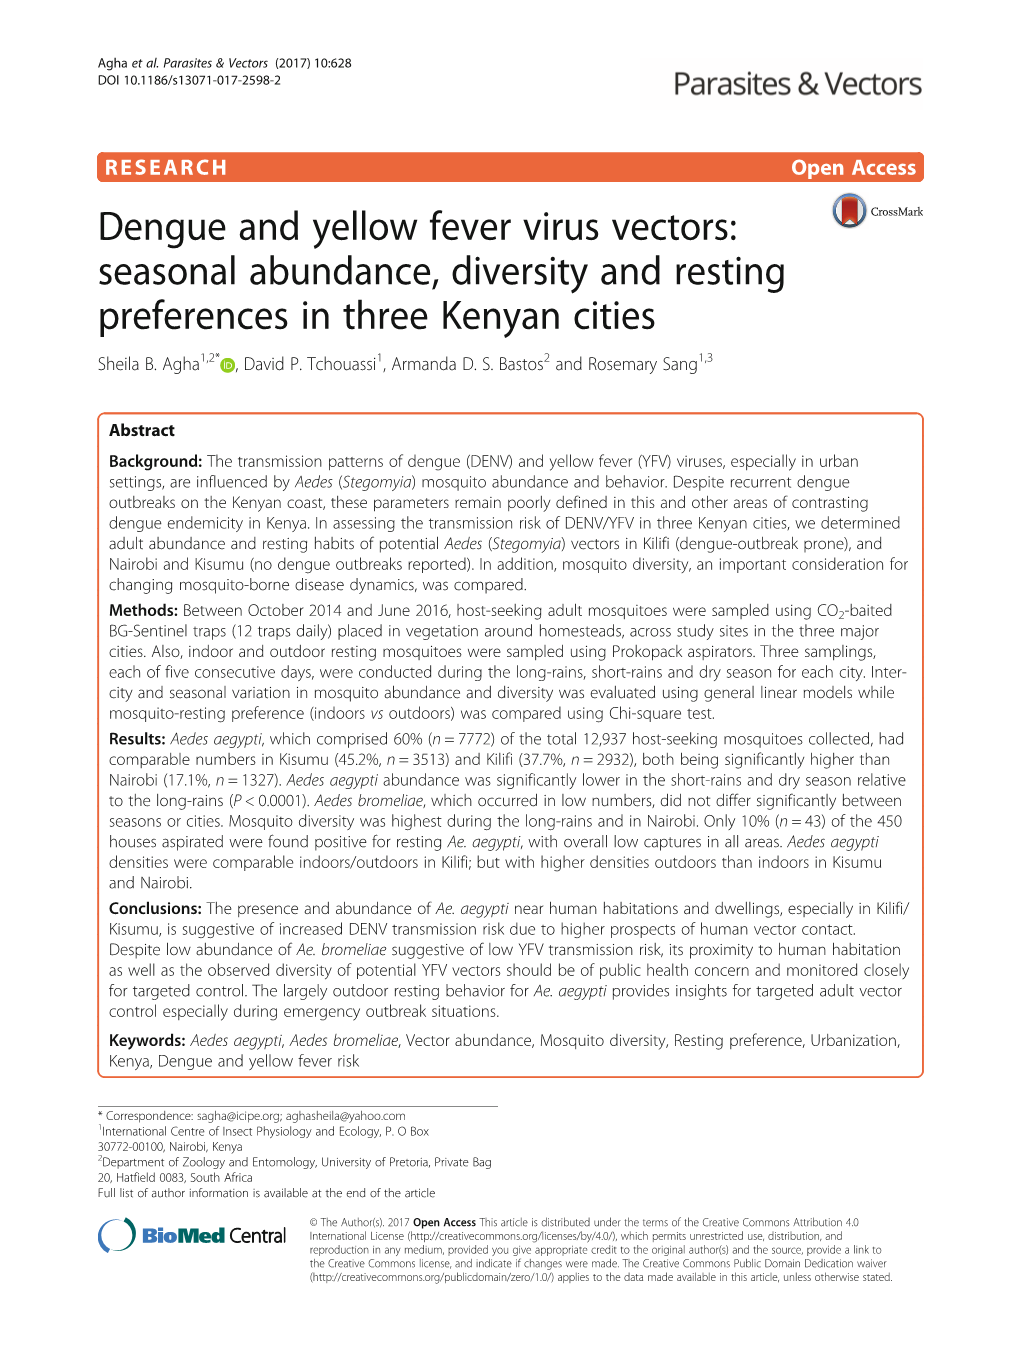 Dengue and Yellow Fever Virus Vectors: Seasonal Abundance, Diversity and Resting Preferences in Three Kenyan Cities Sheila B